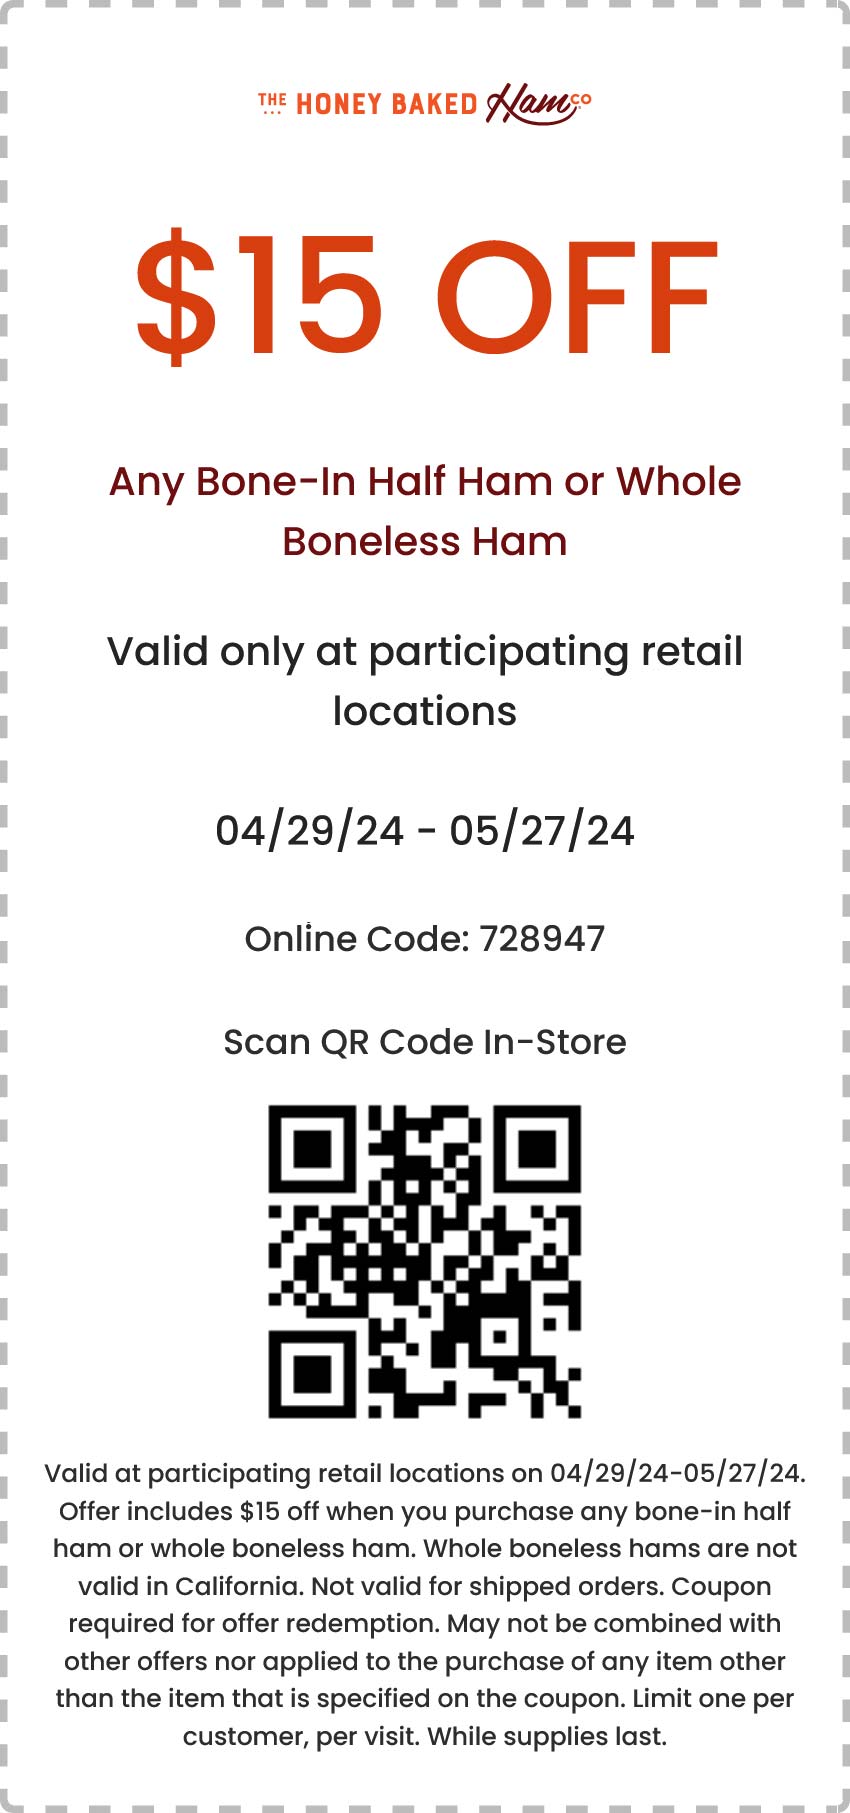 Honeybaked restaurants Coupon  $15 off any whole boneless ham or bone-in half at Honeybaked ham restaurants #honeybaked 